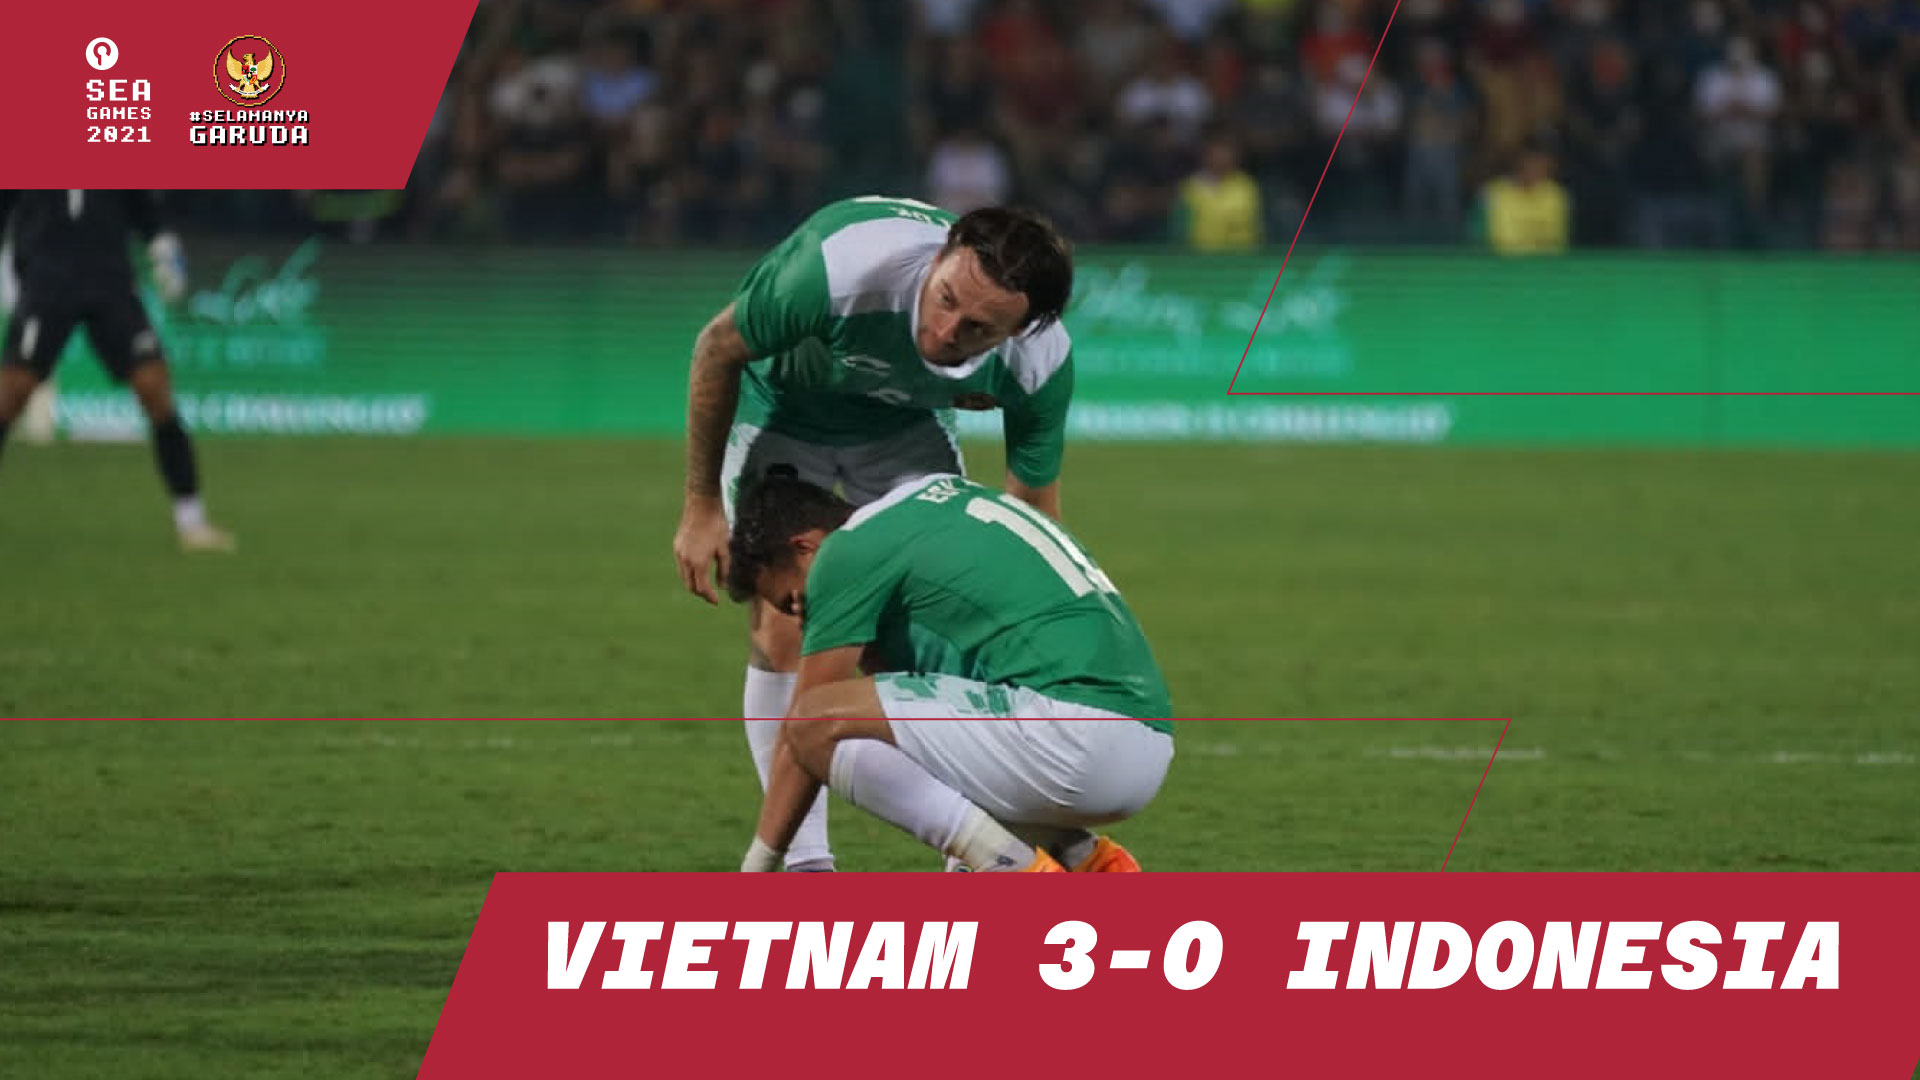 Tinjauan Vietnam vs Indonesia: Eksperimen Gagal Shin Tae-yong